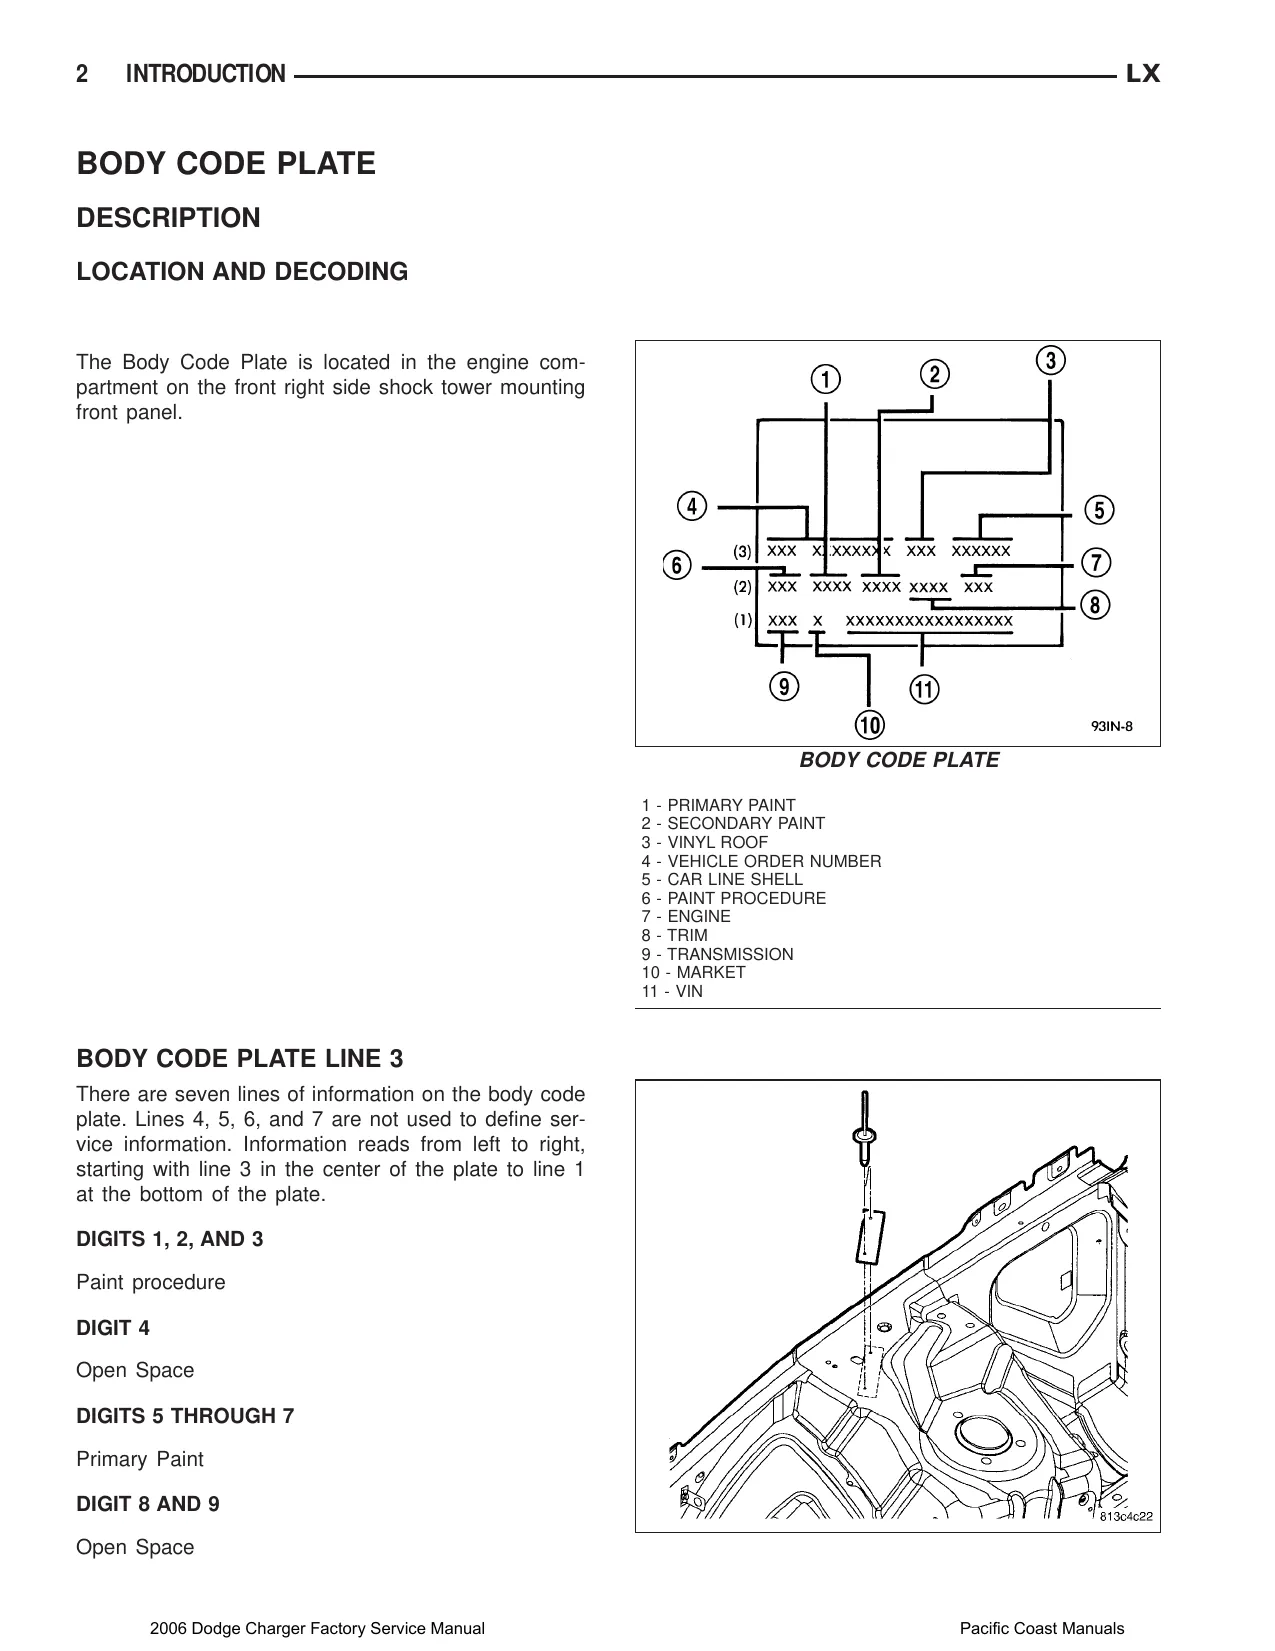 2006 Dodge Charger 300, 300C, SRT-8 series shop manual Preview image 5